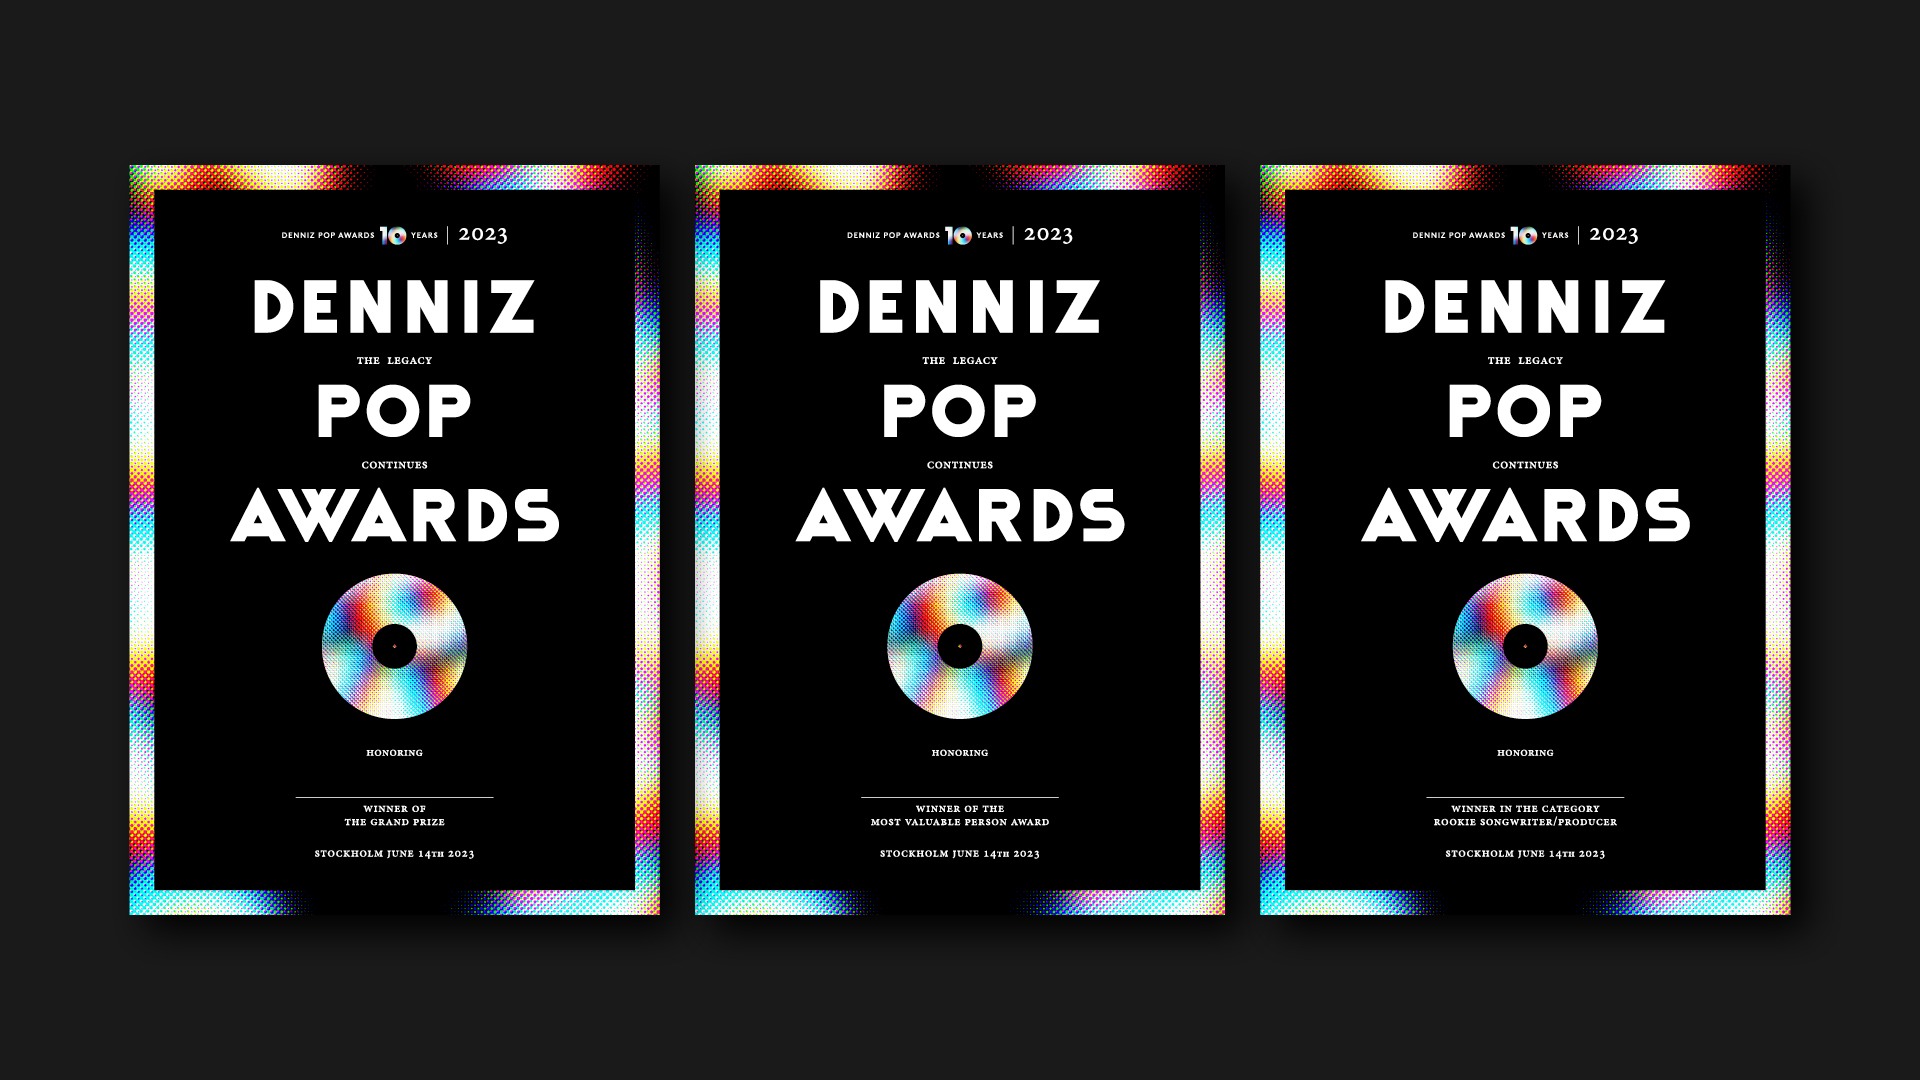 norrsken_studios_denniz-pop-awards_15